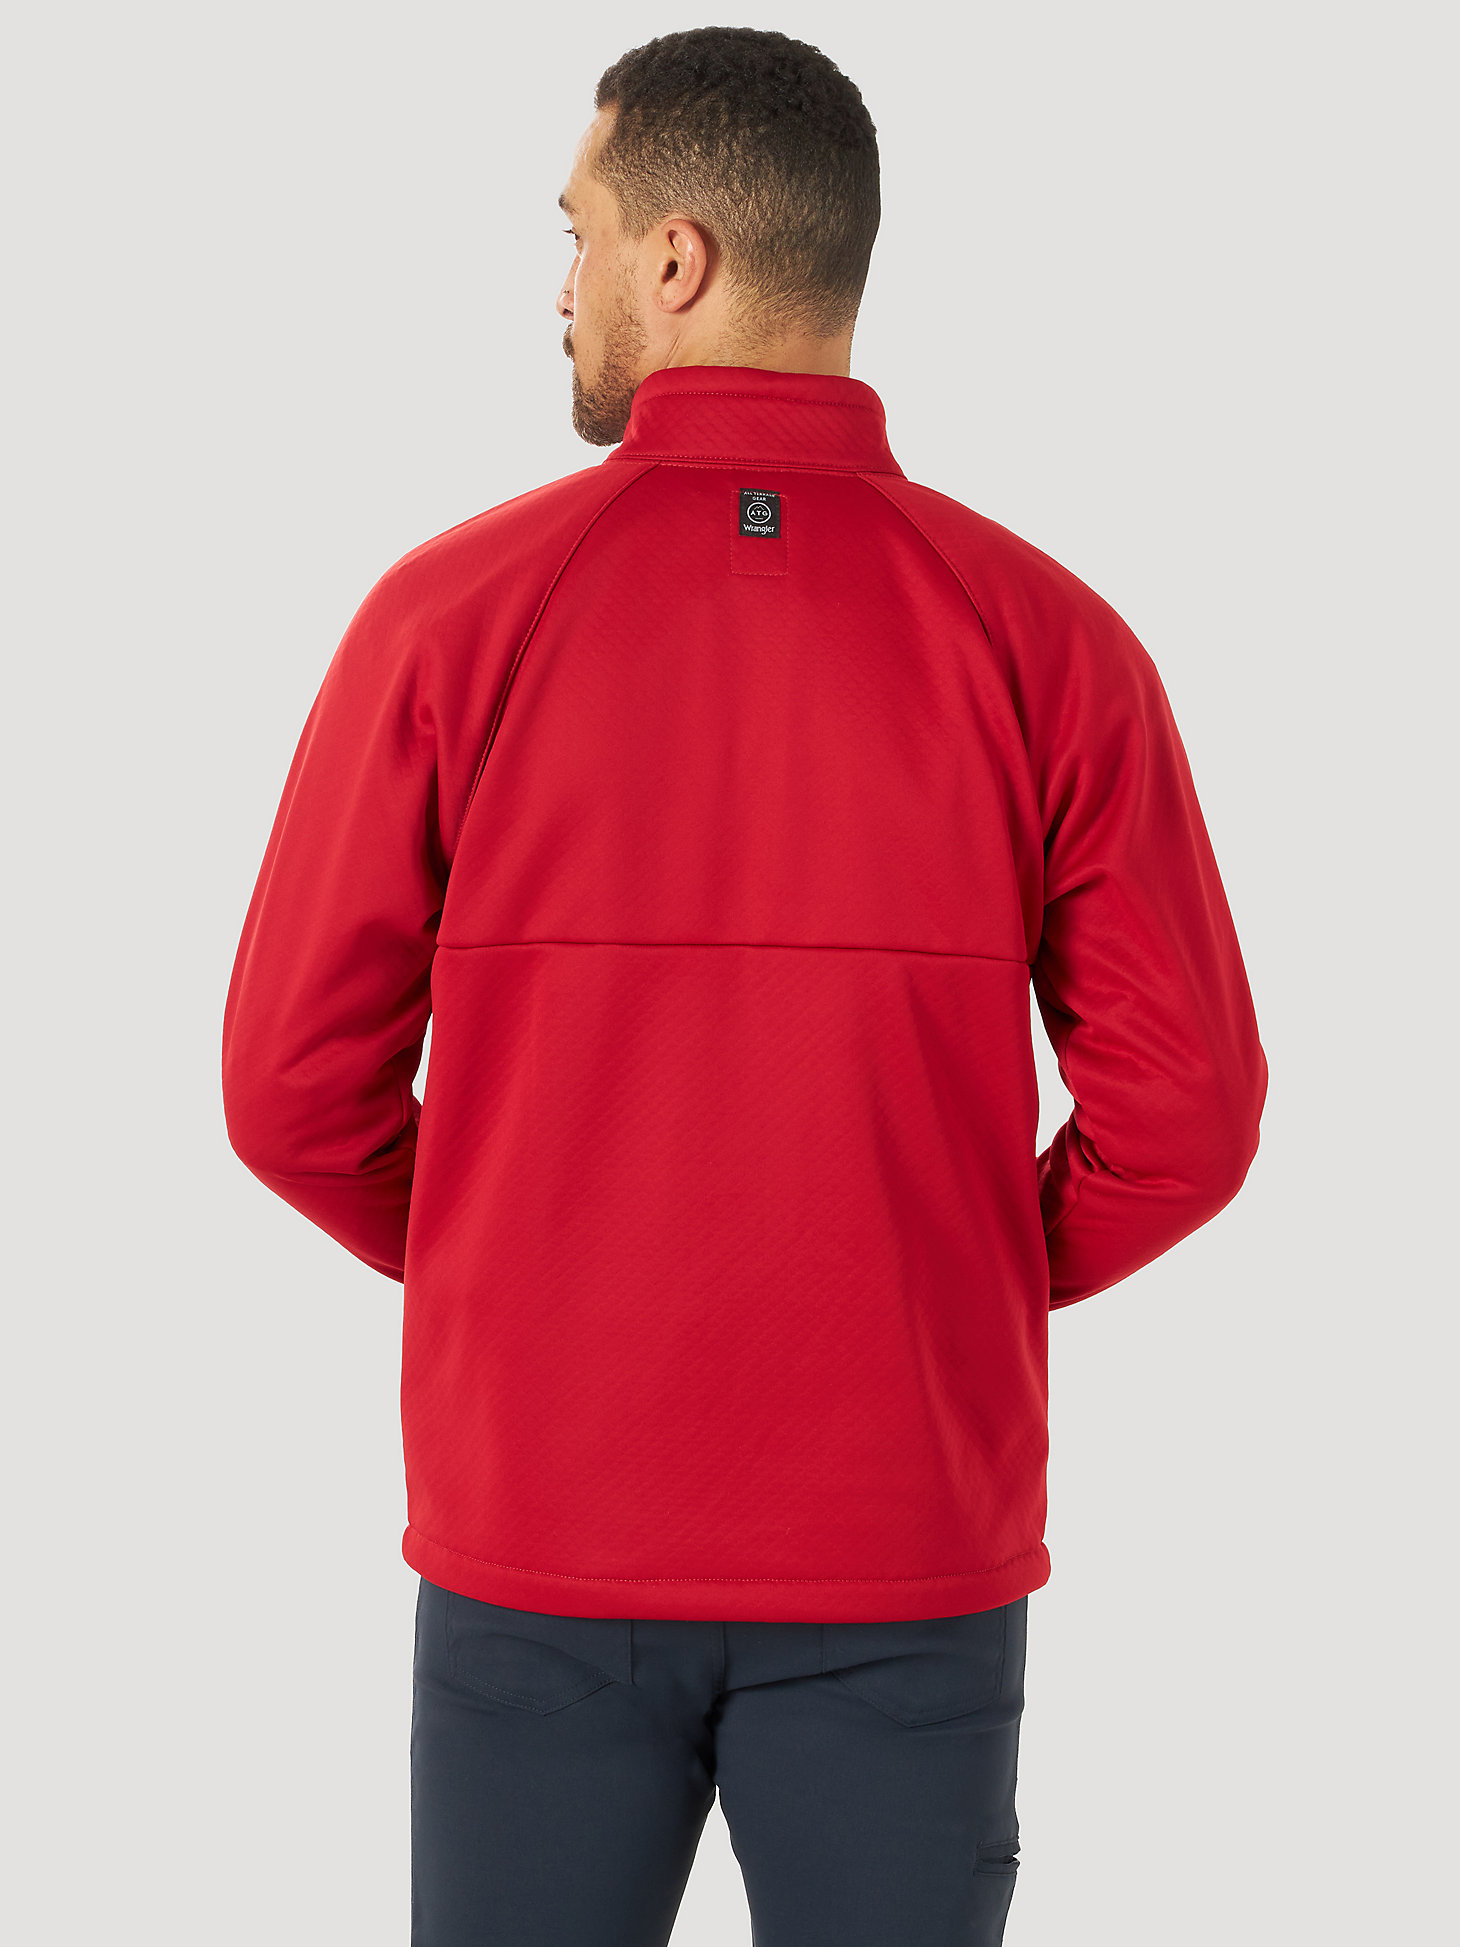 All Terrain Gear 1/2 Zip Sweatshirt in Haute Red alternative view 2